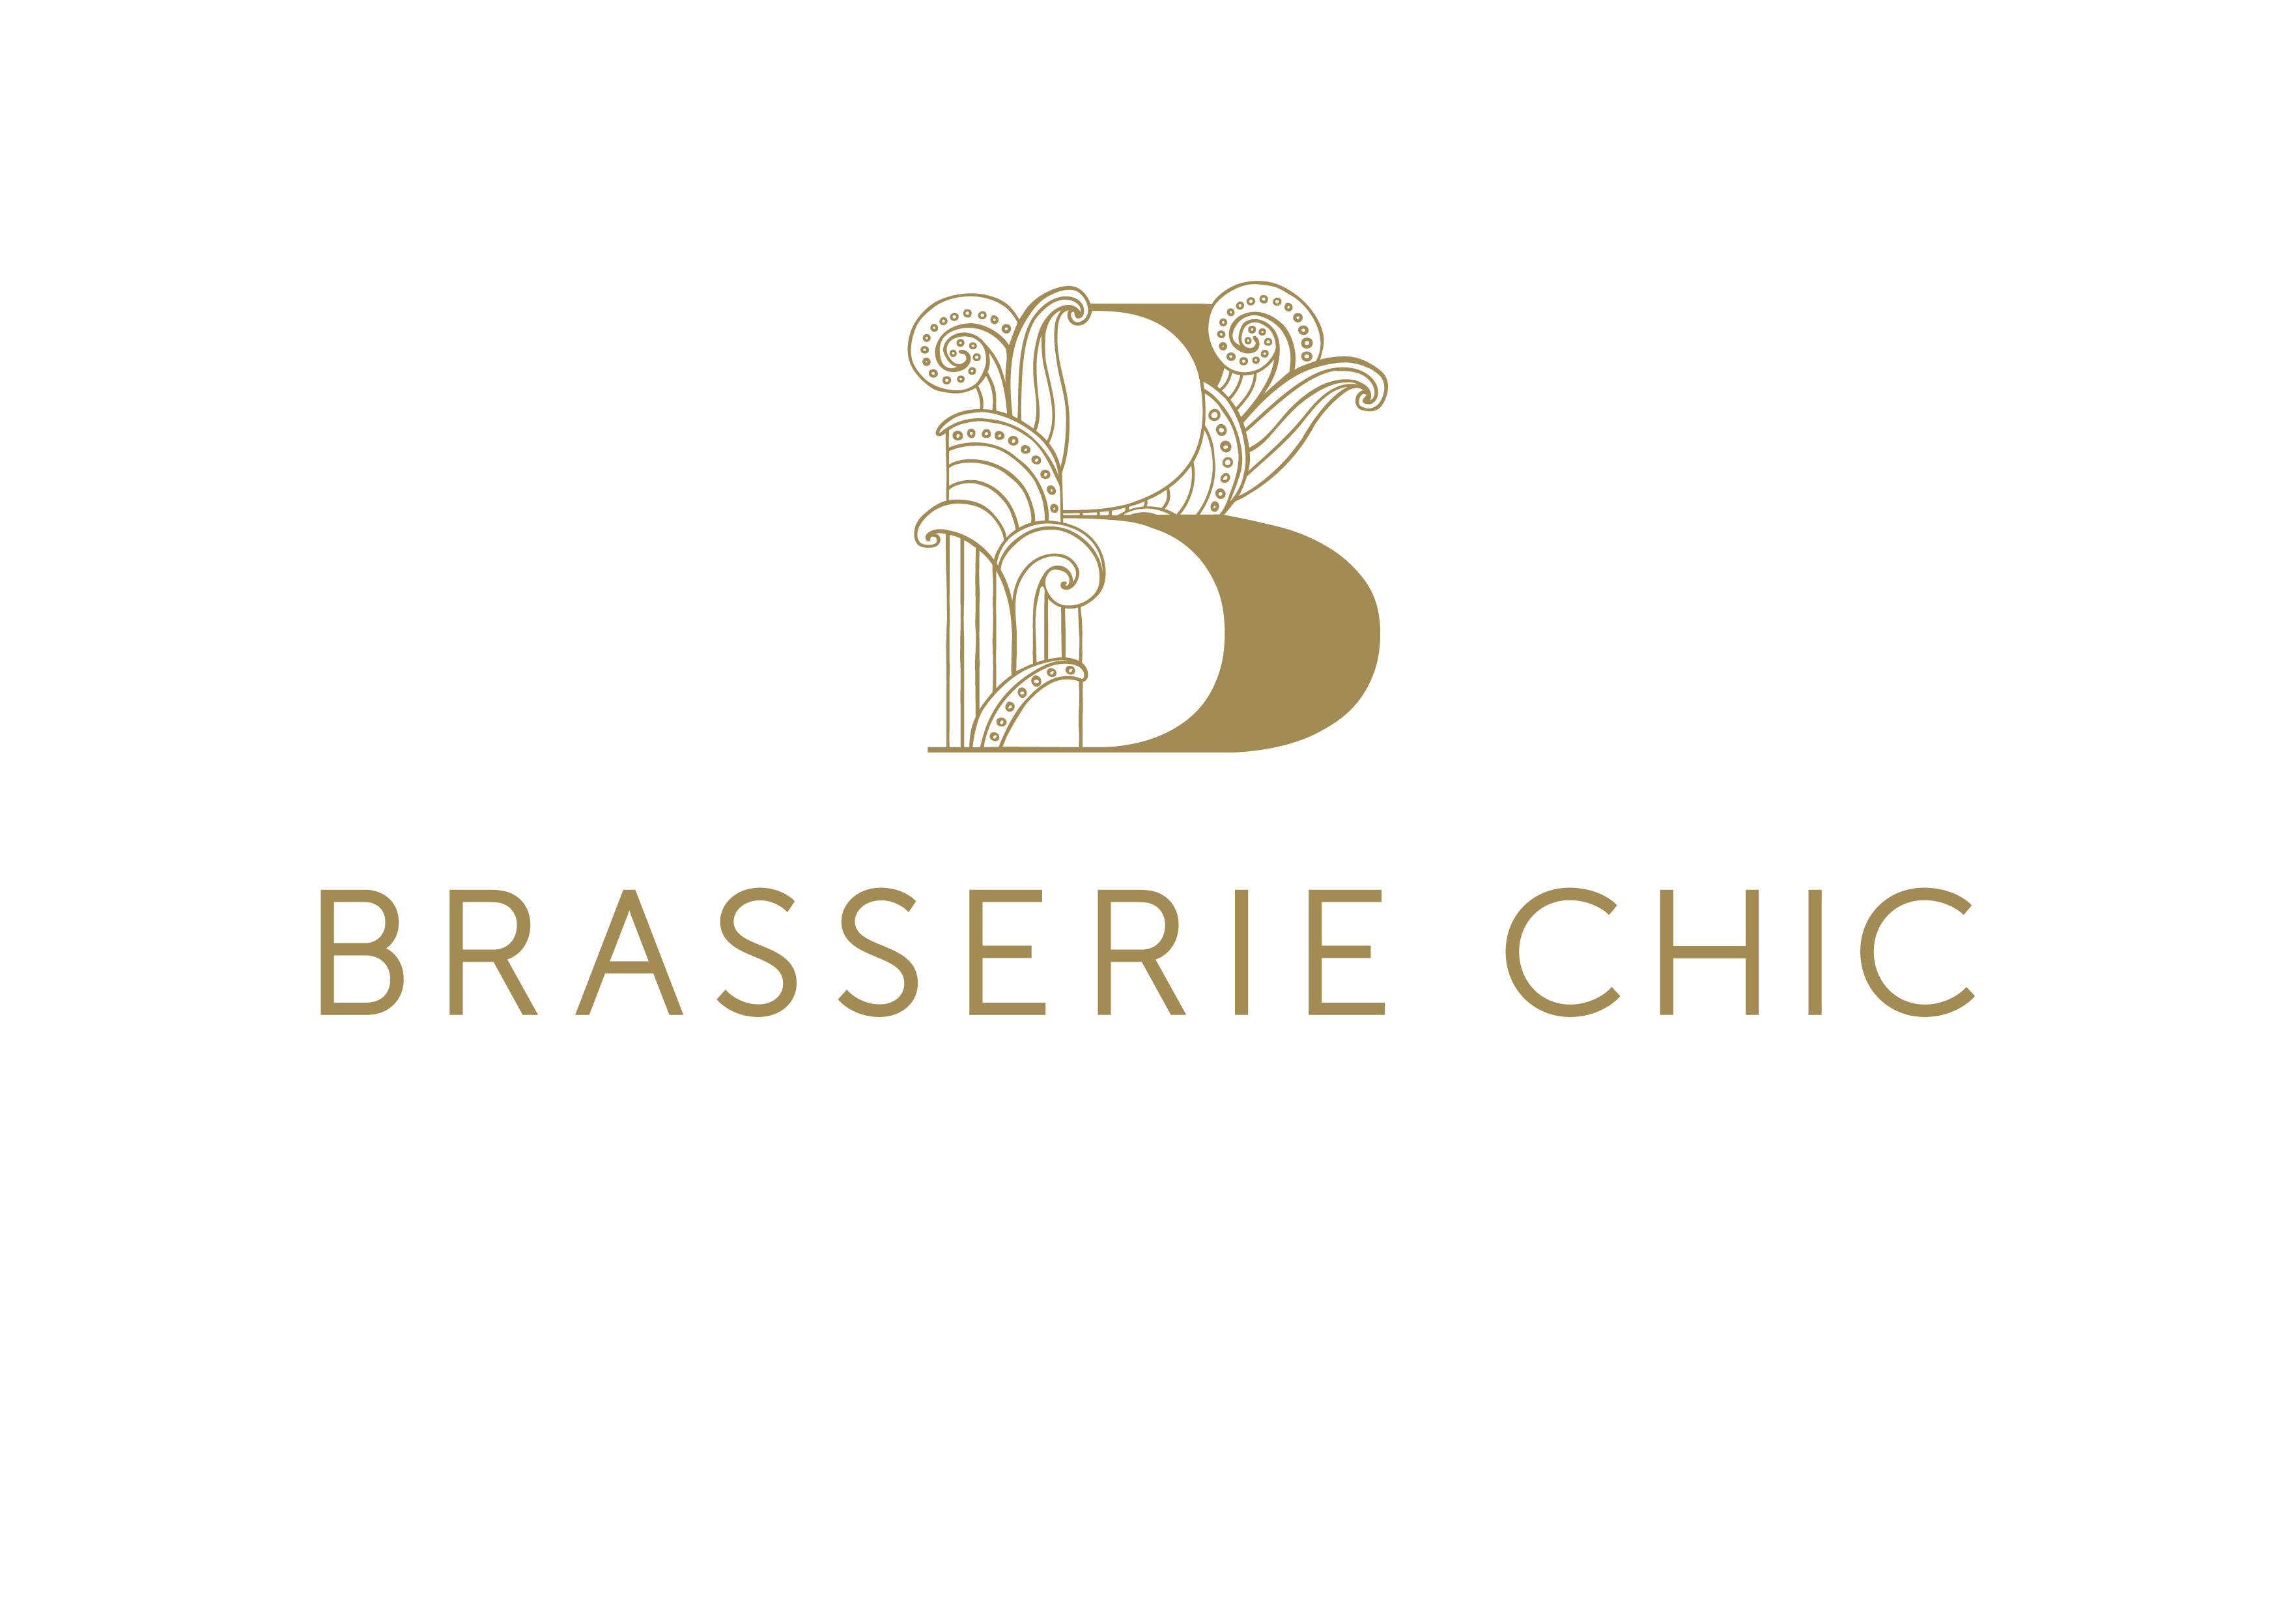 brasserie chic logo